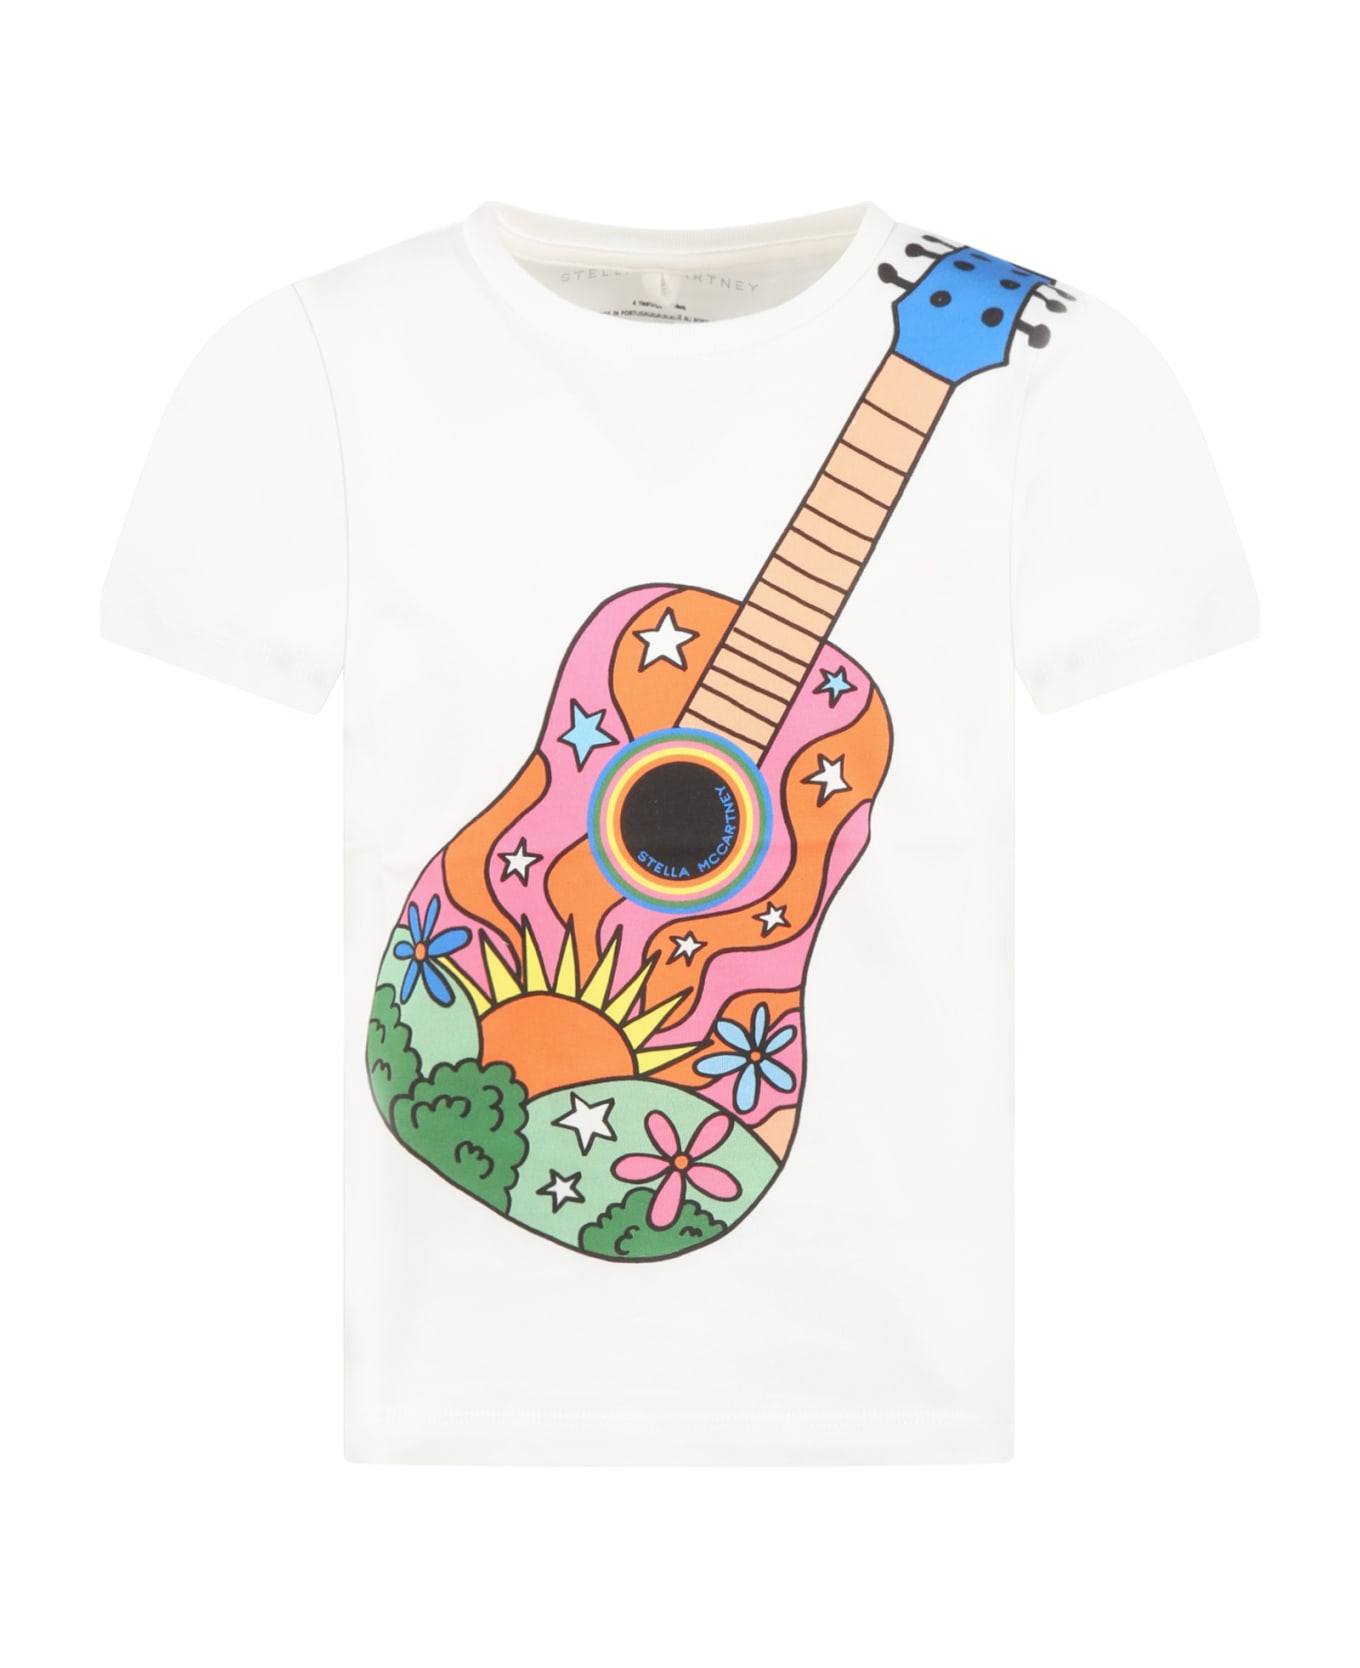 Stella McCartney Kids White Tshirt With Guitar Print For Girl - White